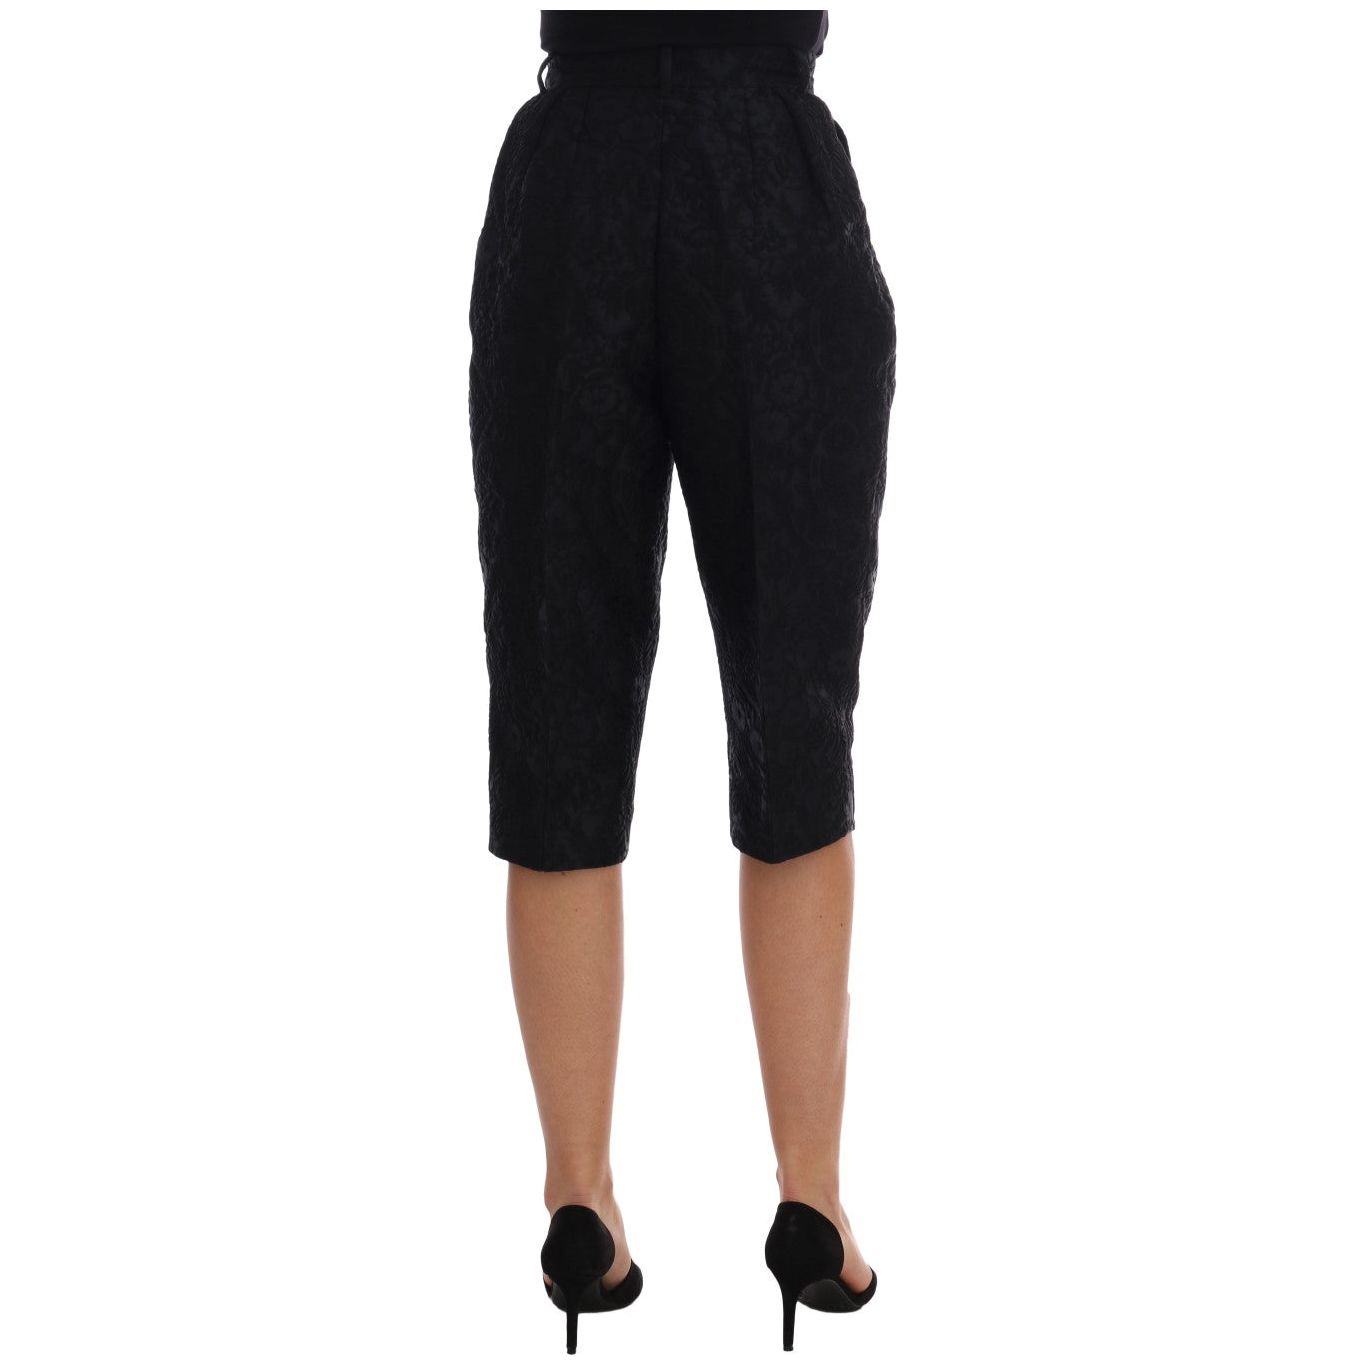 Dolce & Gabbana Elegant Floral Brocade Dress Shorts black-brocade-high-waist-capri-shorts Jeans & Pants 513087-black-brocade-high-waist-capri-shorts-2.jpg